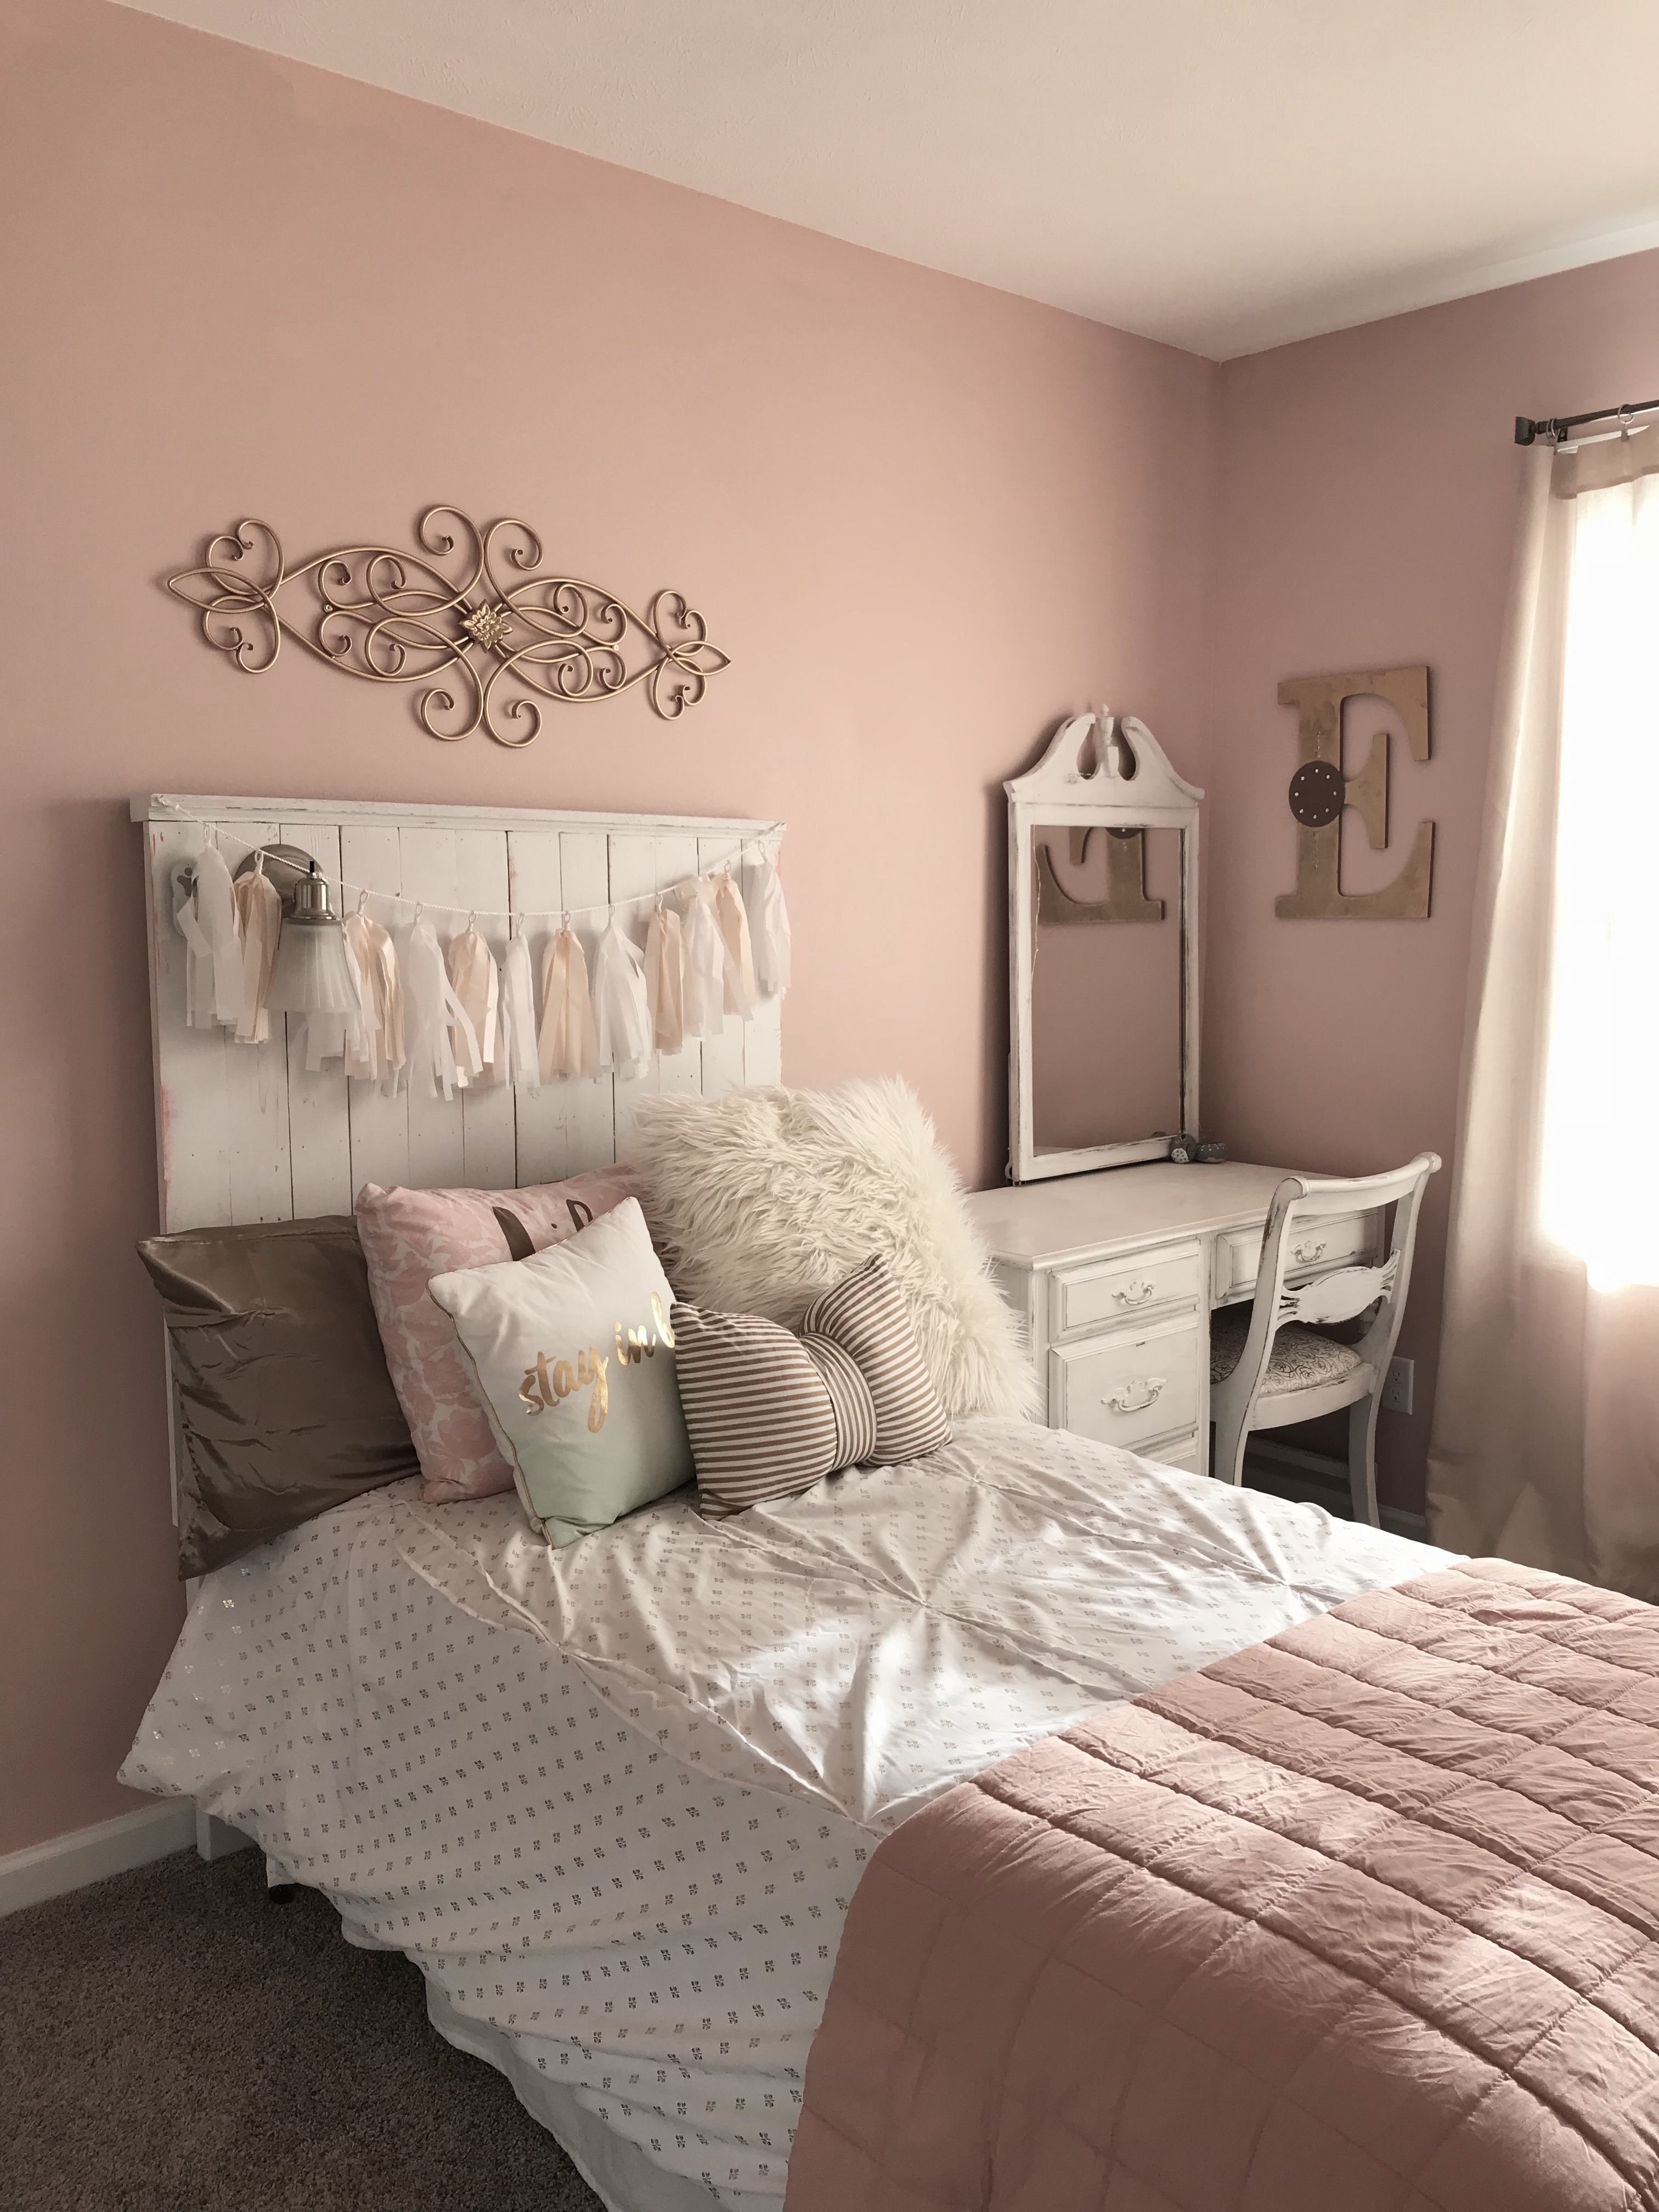 Бледно розово коричневый. Спальня в розово бежевых тонах. Комната для девочки в пастельных тонах. Спальная комната в пастельных тонах. Бежевая комната для девочки подростка.